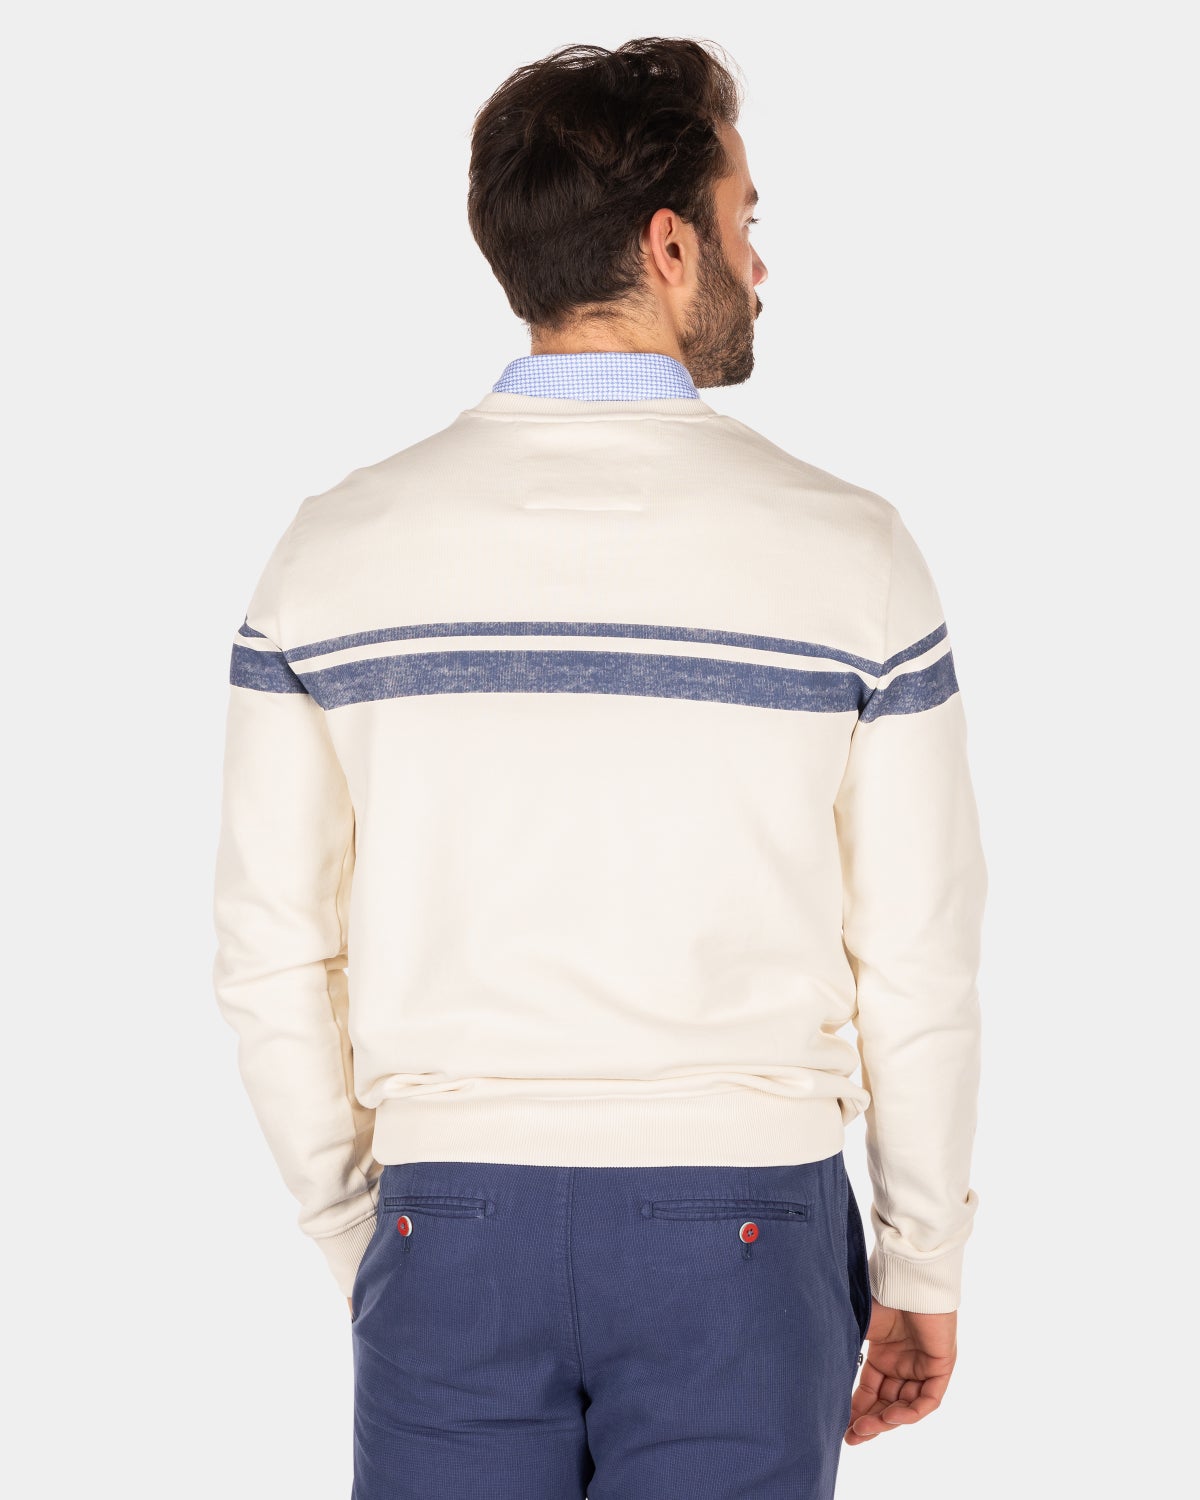 Witte sweater met blauwe streep - Cream